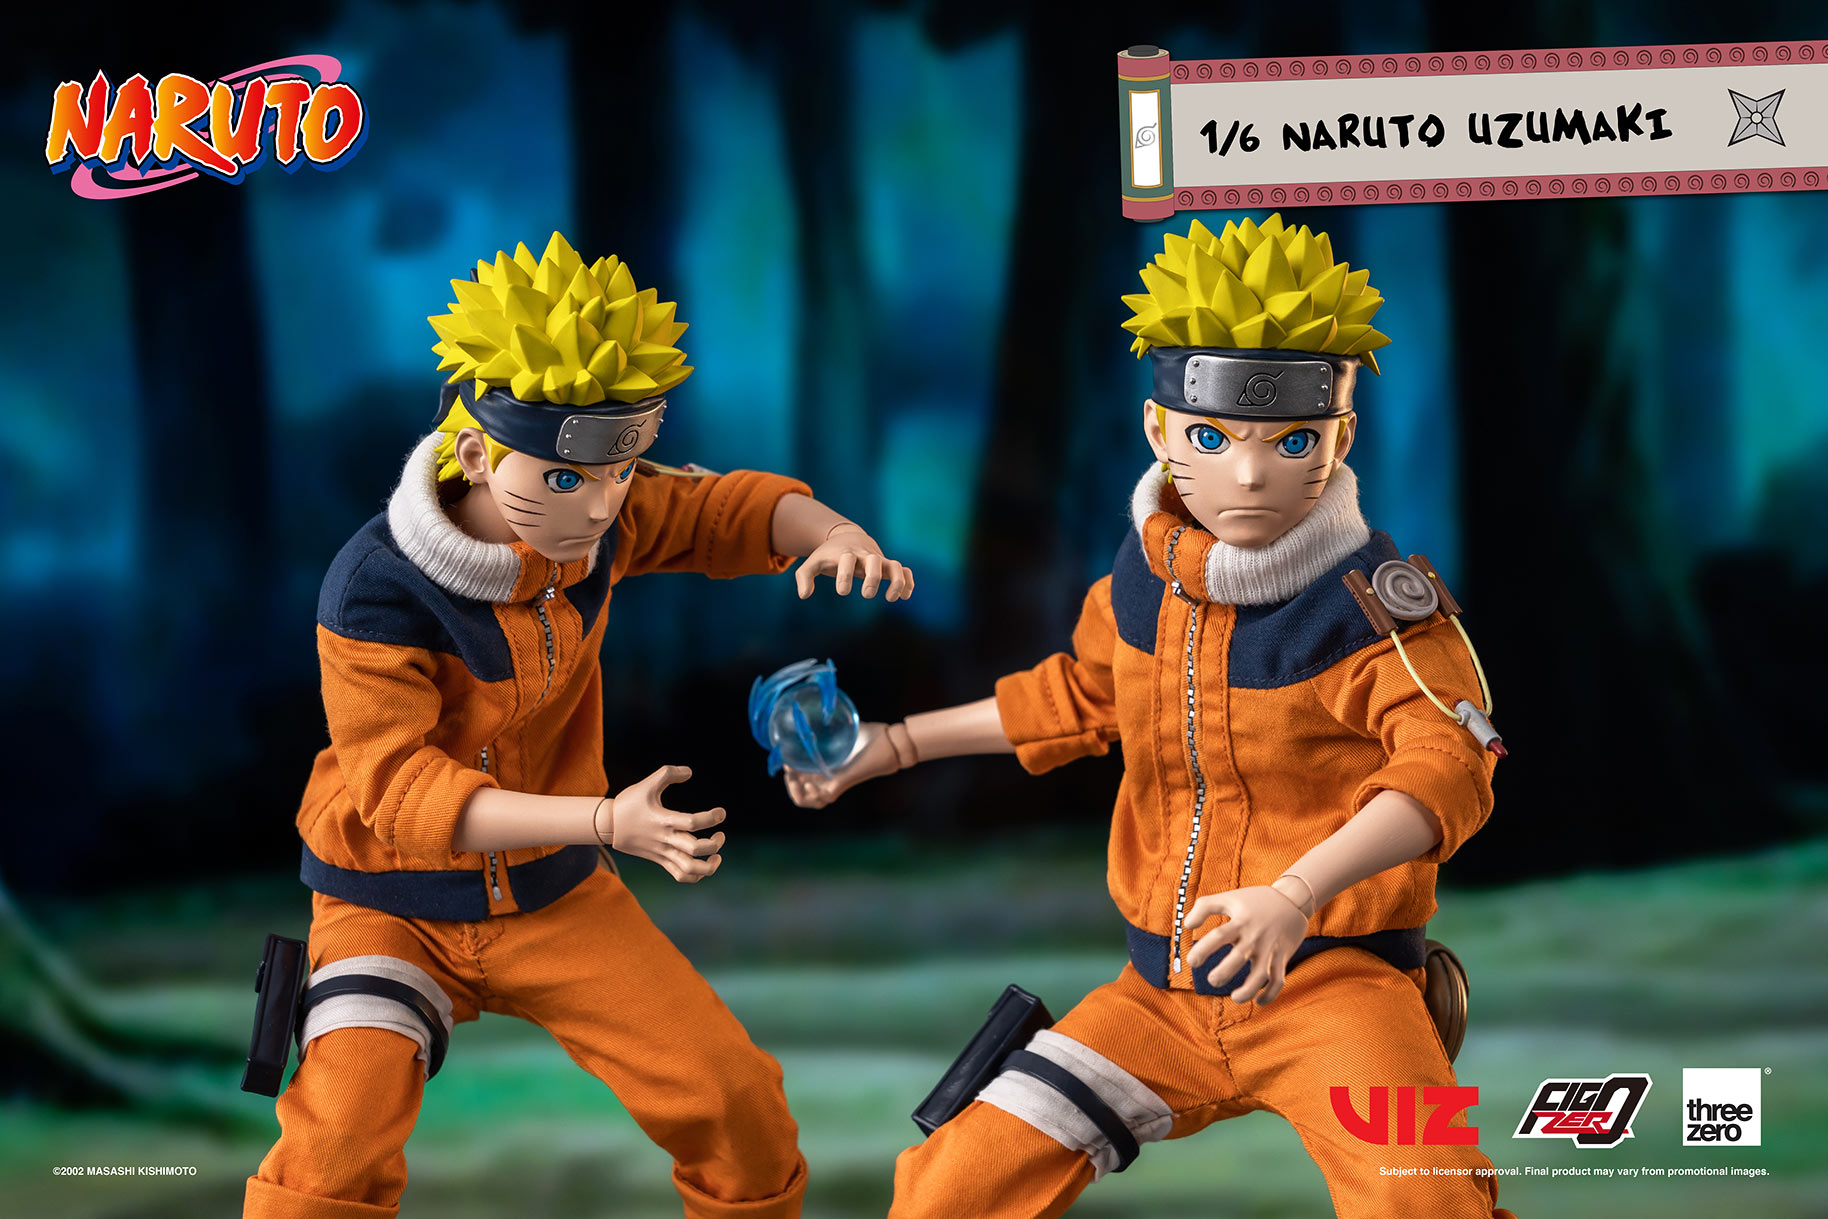 Naruto: Bonecos, Games e Mais